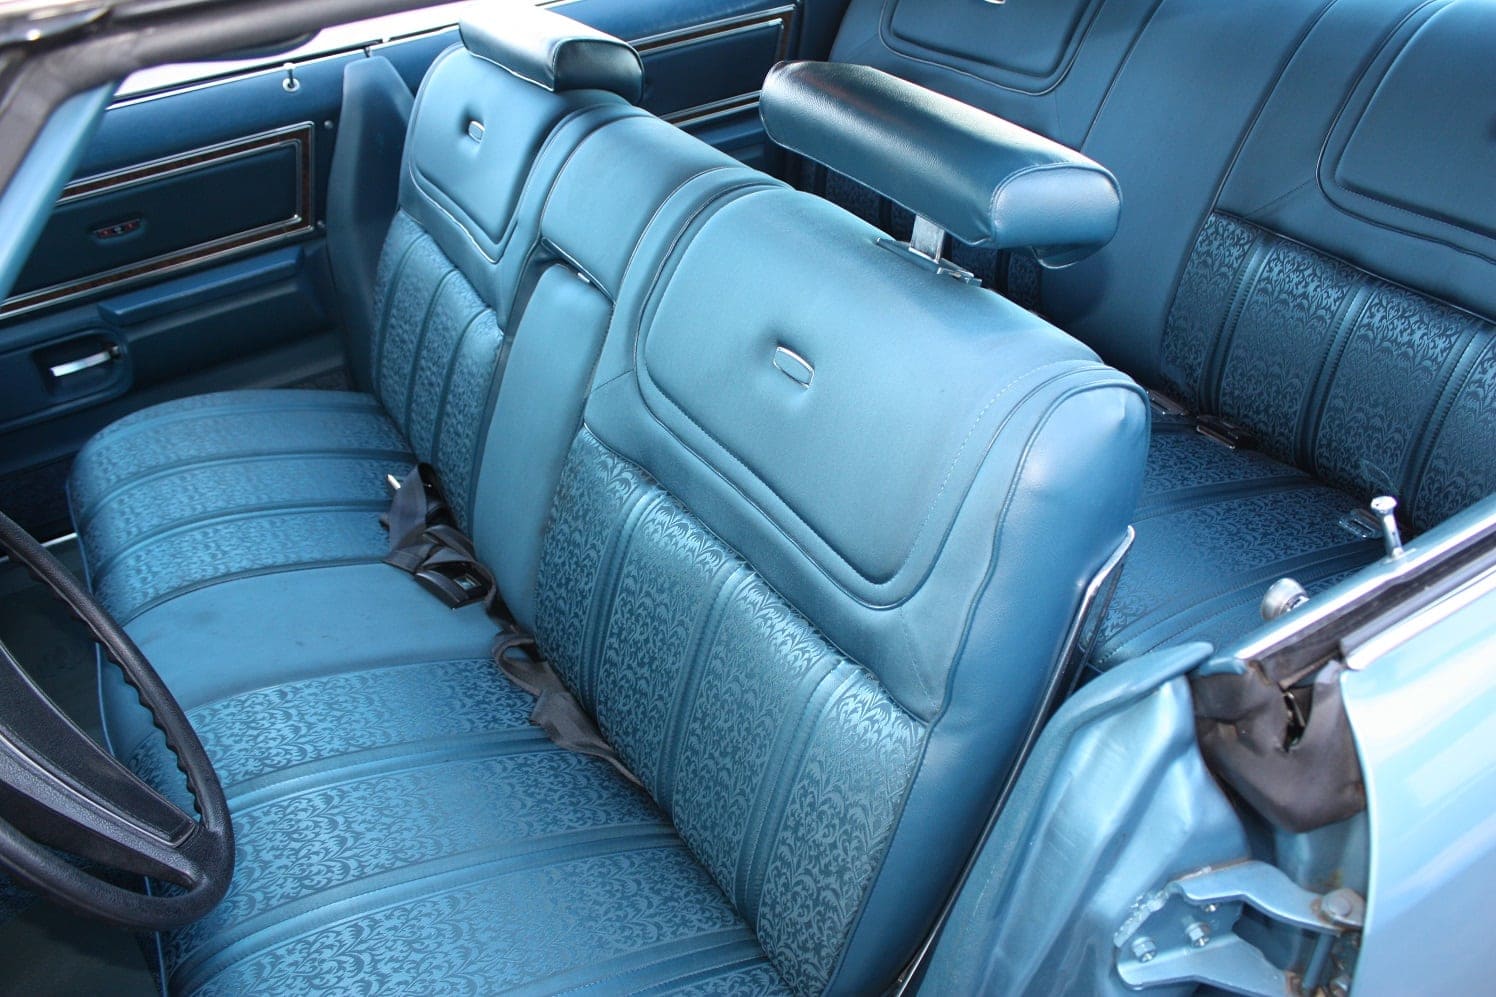 1971 Chevrolet Caprice blue